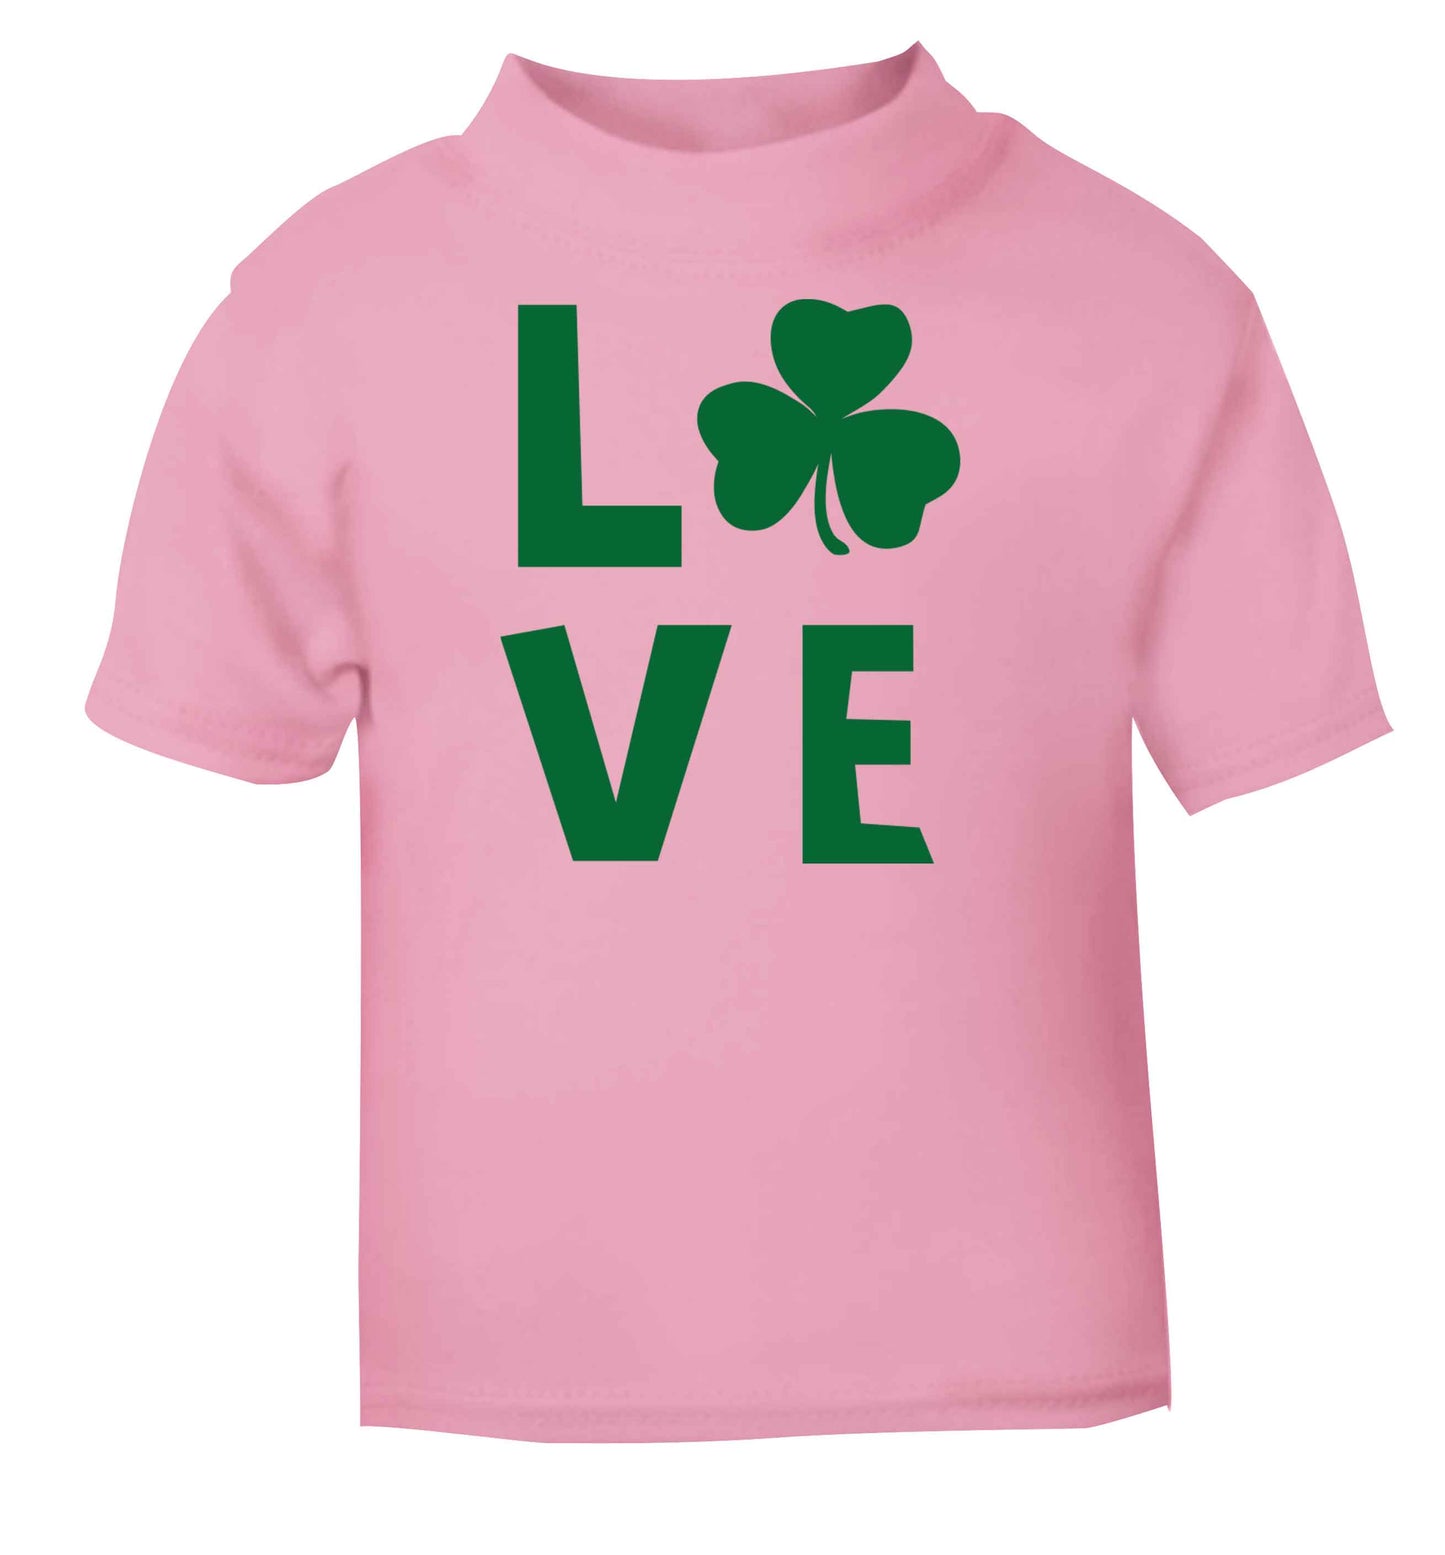 Shamrock love light pink baby toddler Tshirt 2 Years